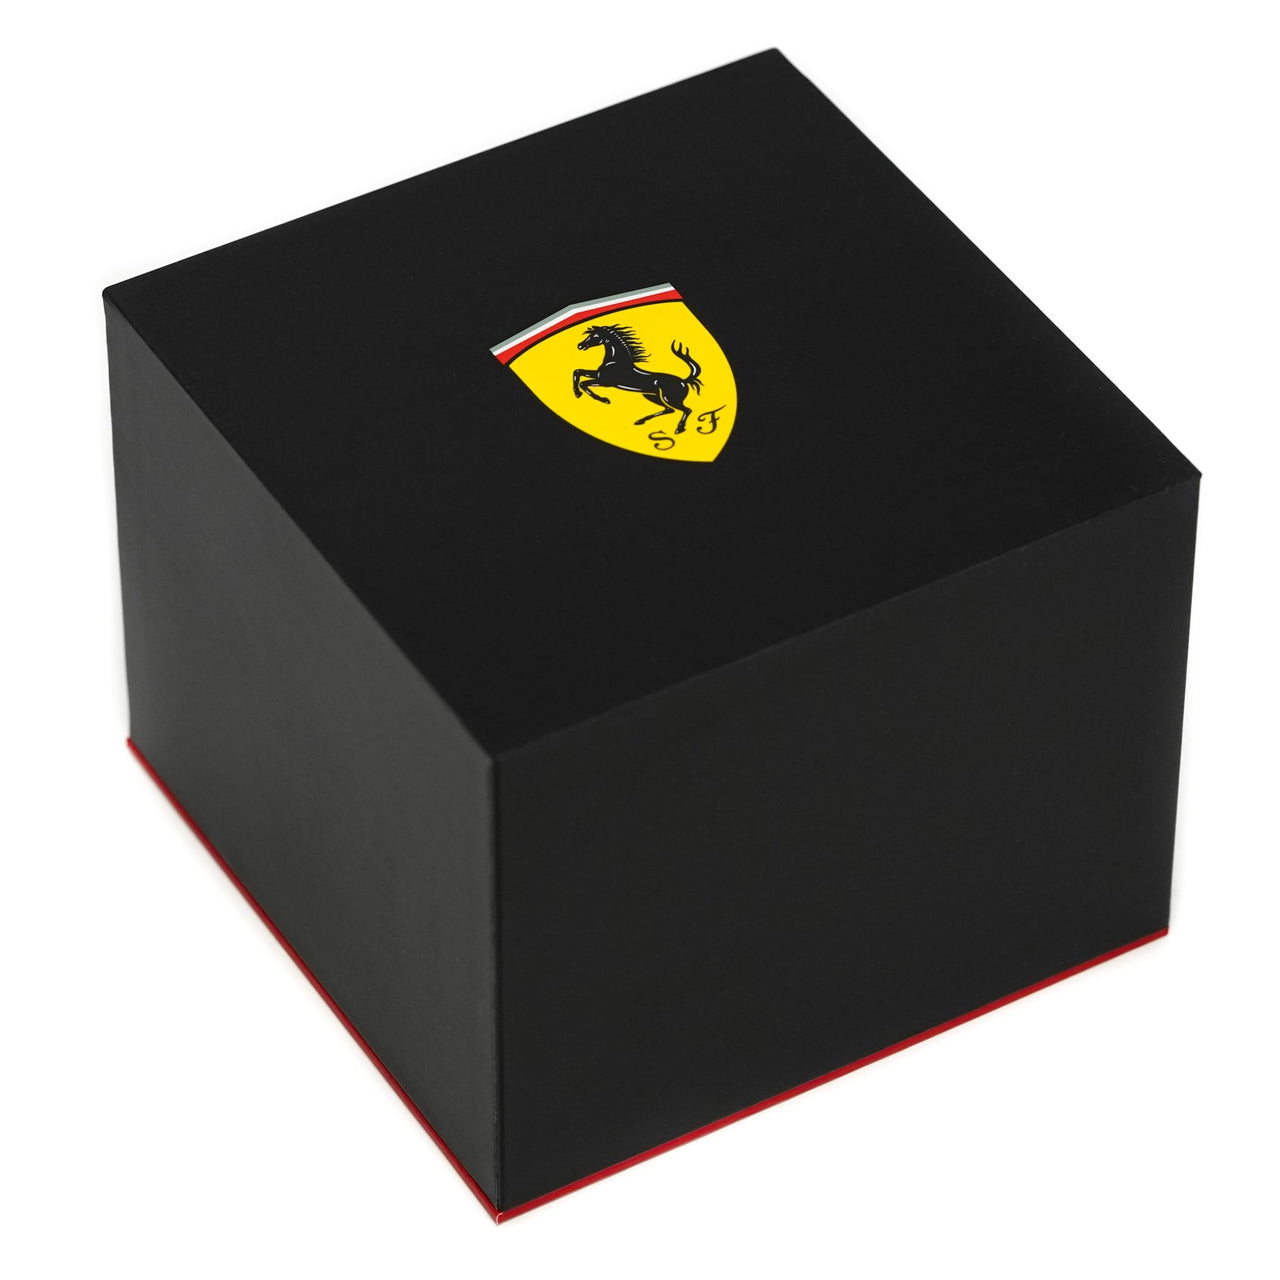 Scuderia Ferrari Automatic Watch Speciale Evo Black FE-083-0366 - Watches & Crystals